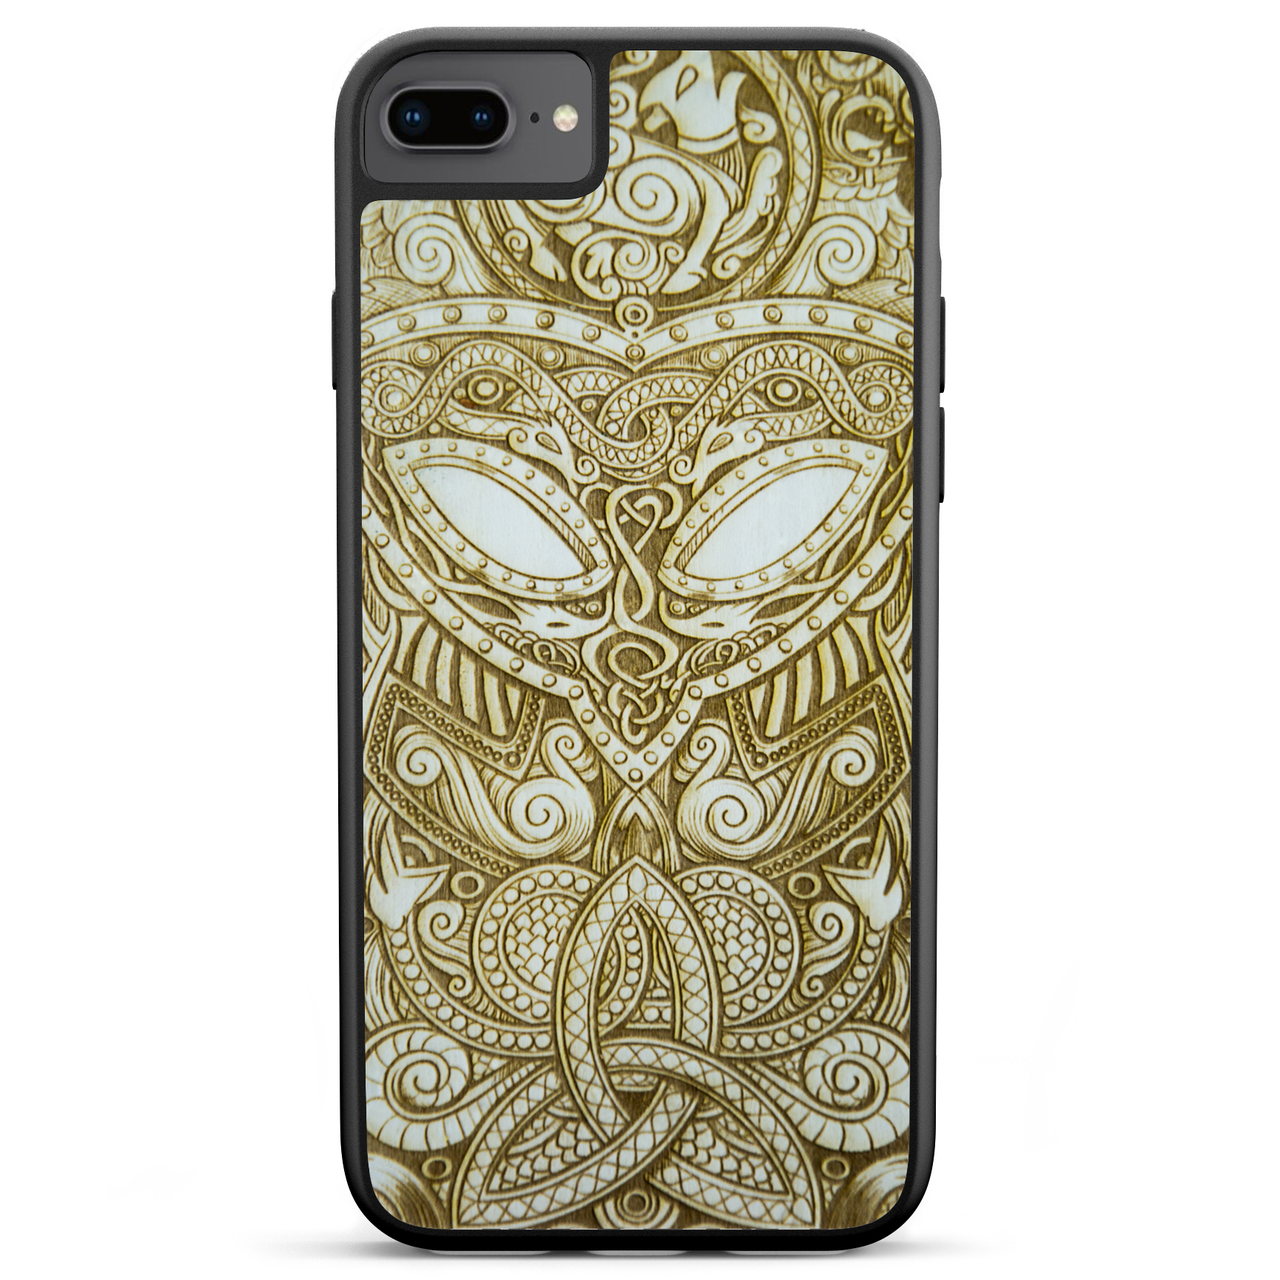 iPhone 7 Plus Viking Wood Phone Case